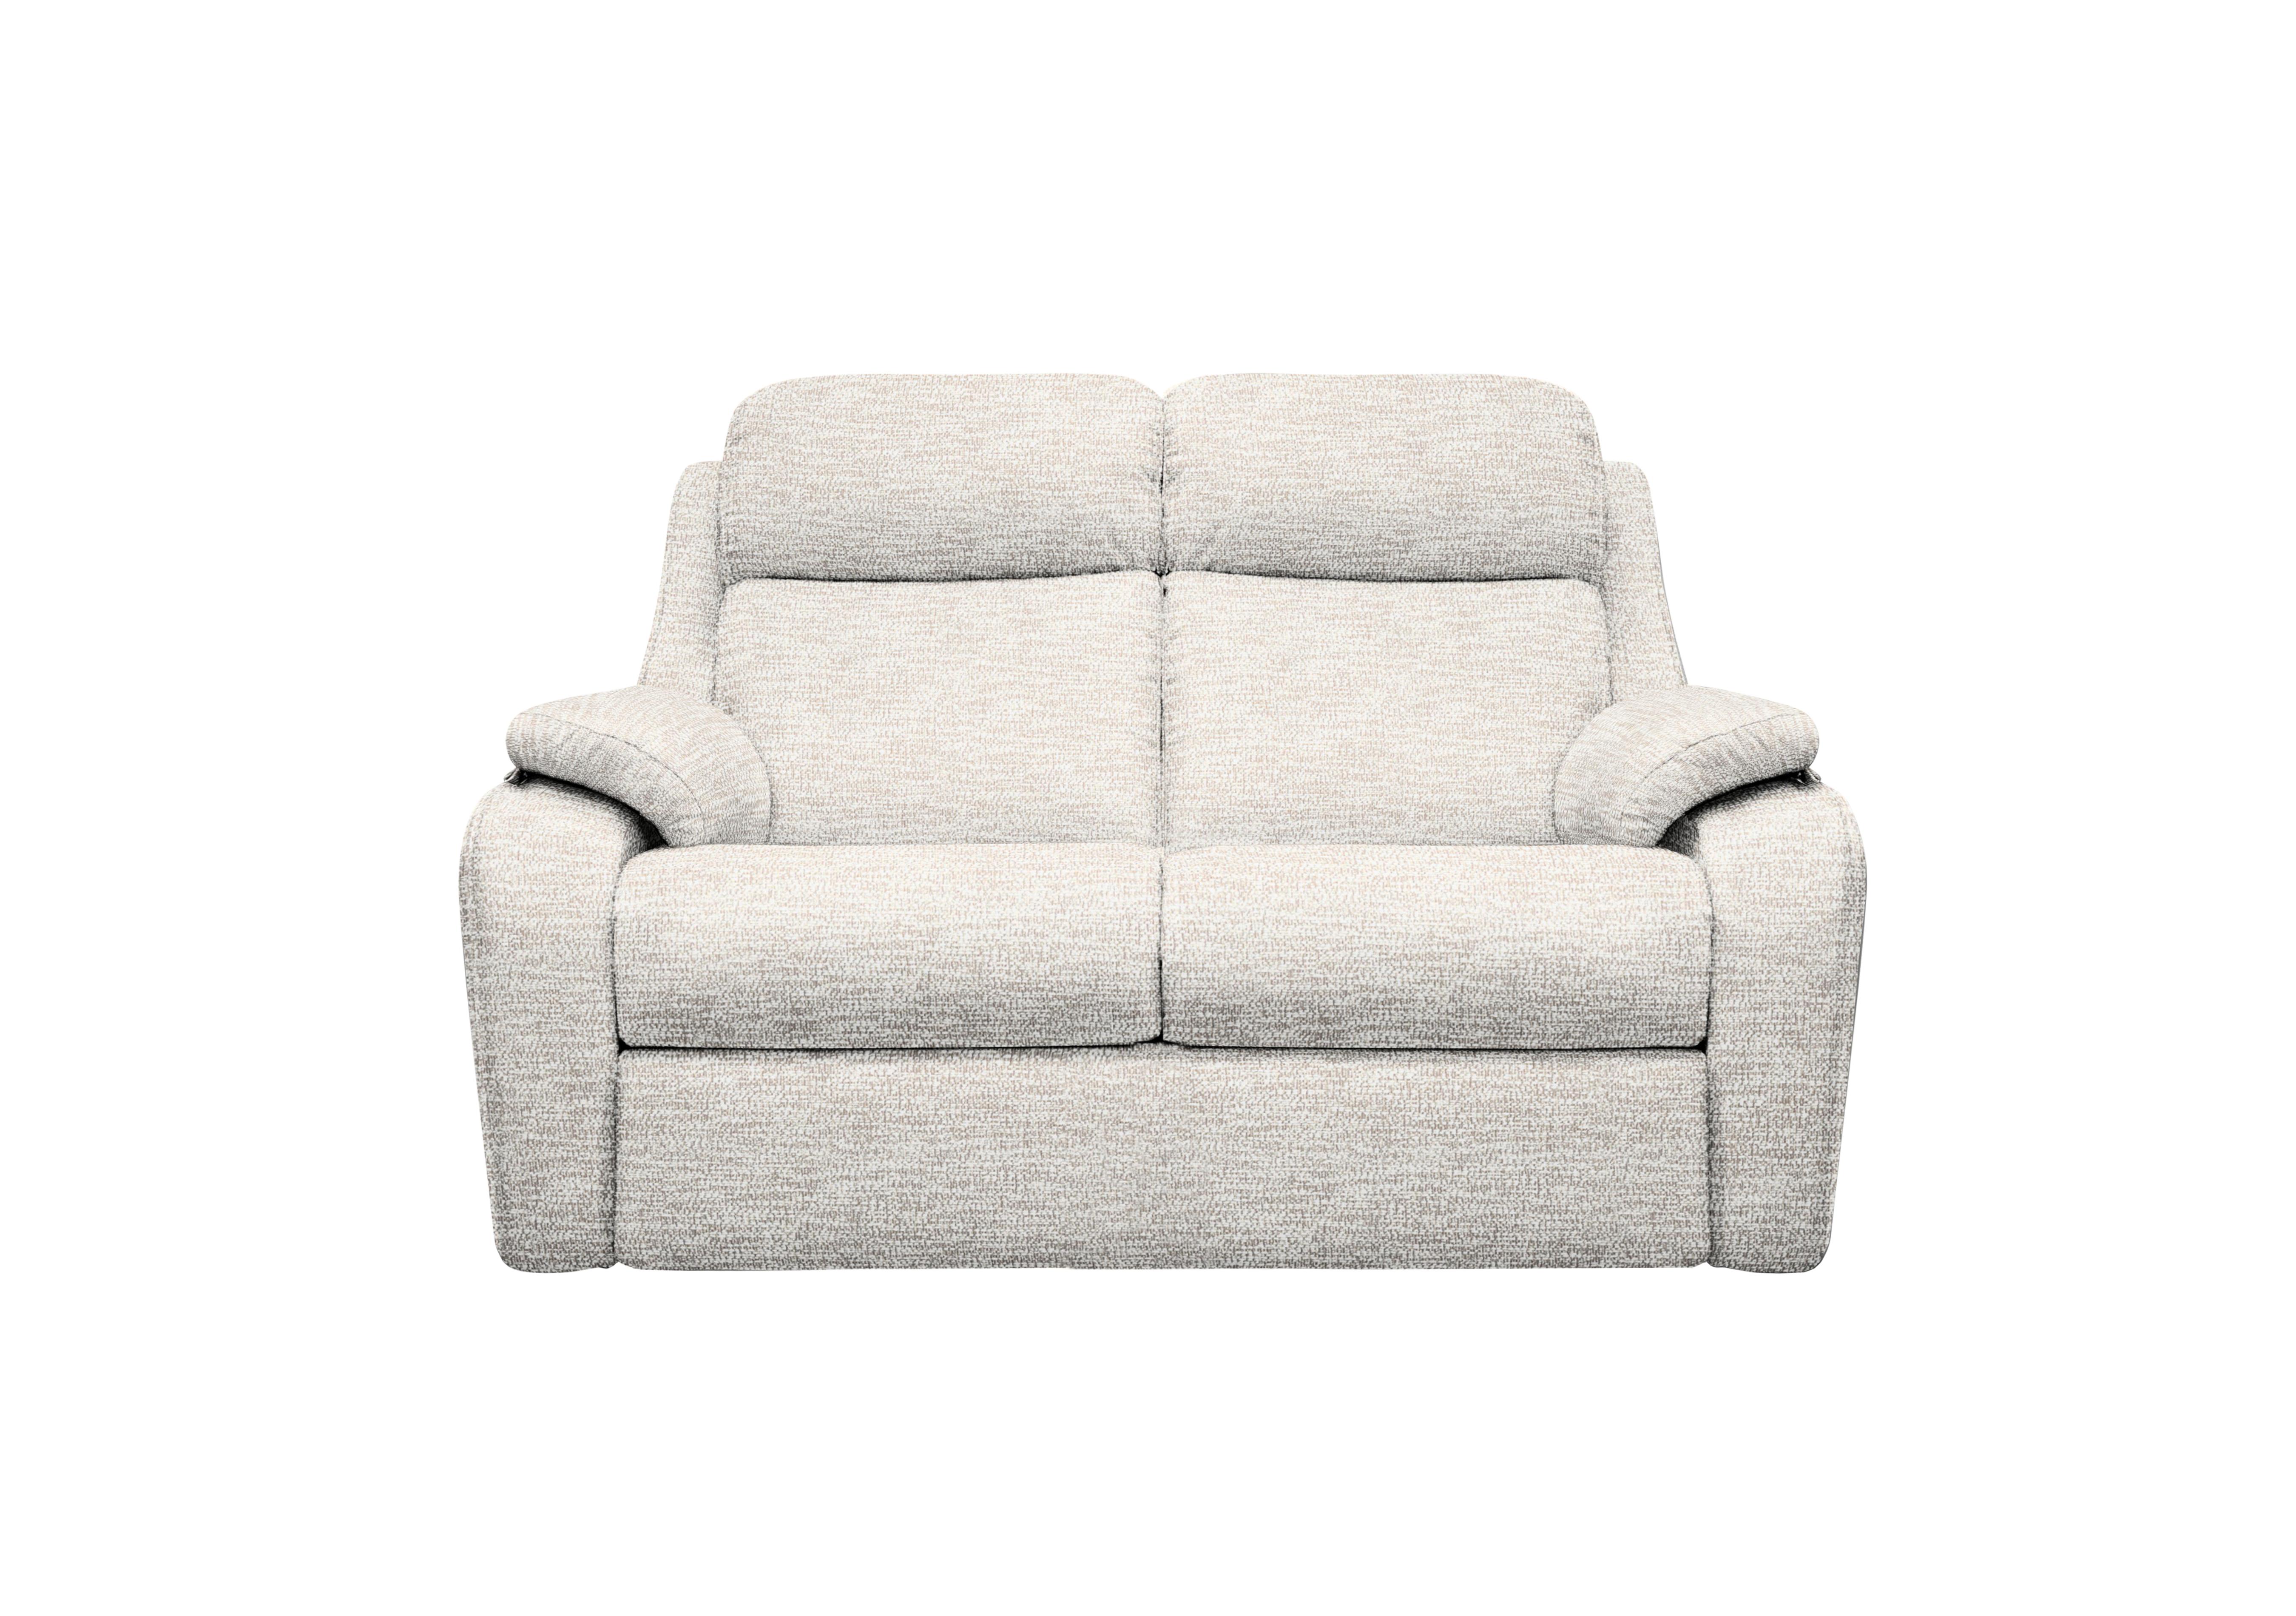 Kingsbury 2 Seater Fabric Sofa in C931 Rush Cream on Furniture Village